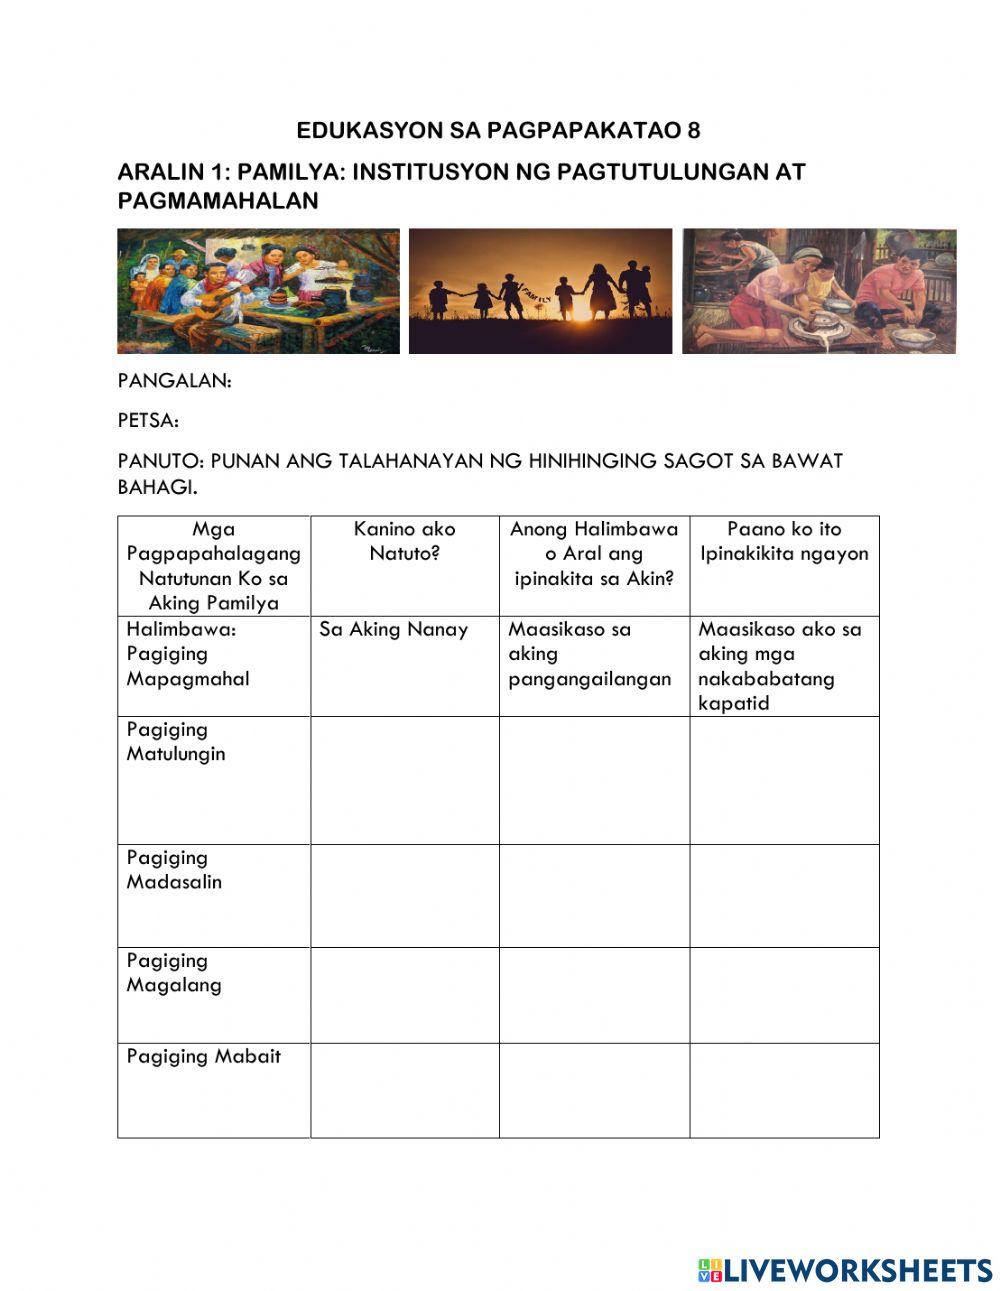 ESP 8 Aralin 1: Pamilya: Institusyon ng Pagtutulungan at Pagmamahalan